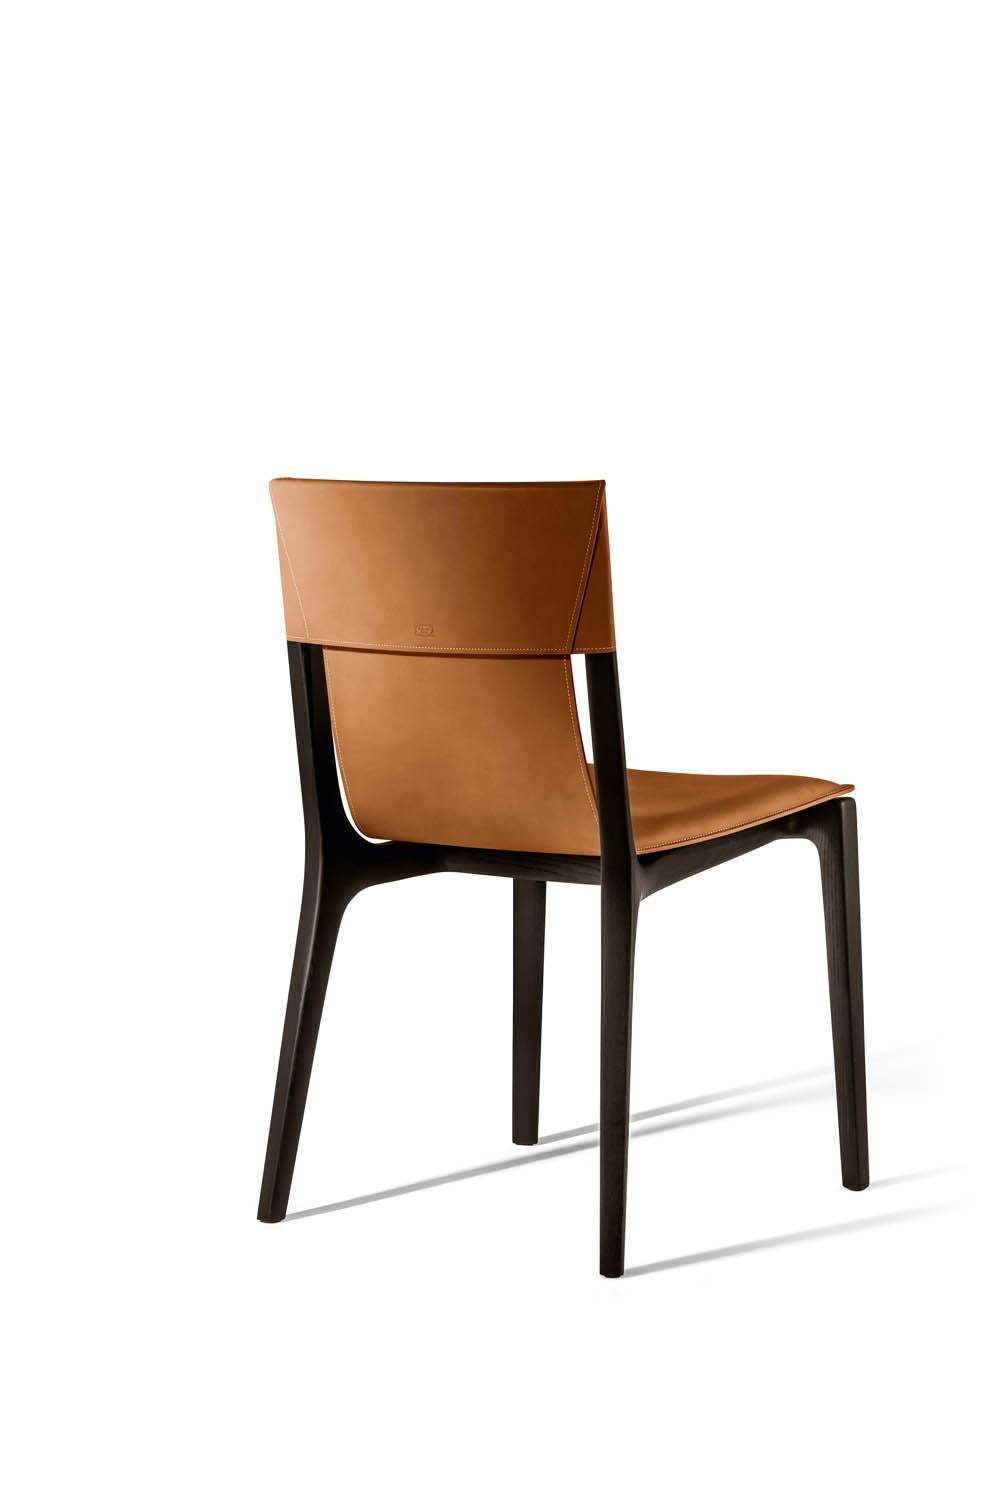 Moderne Chaise Isadora Cammello Saddle - Pieds en cuir extra marron clair finition griffes en vente